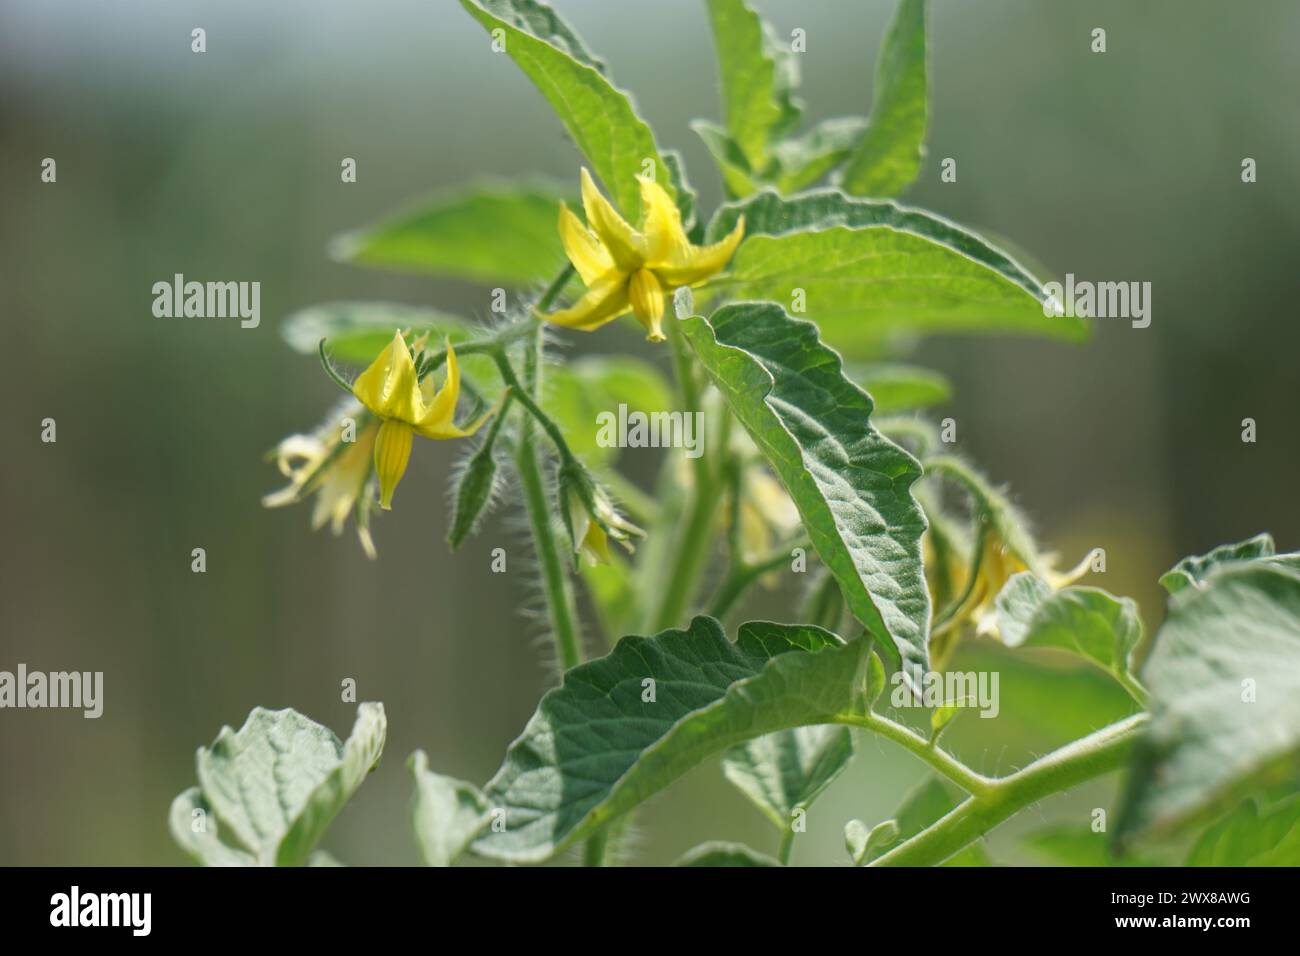 Tomato flower (Also called Solanum lycopersicum, Lycopersicon lycopersicum, Lycopersicon esculentum) on the tree Stock Photo